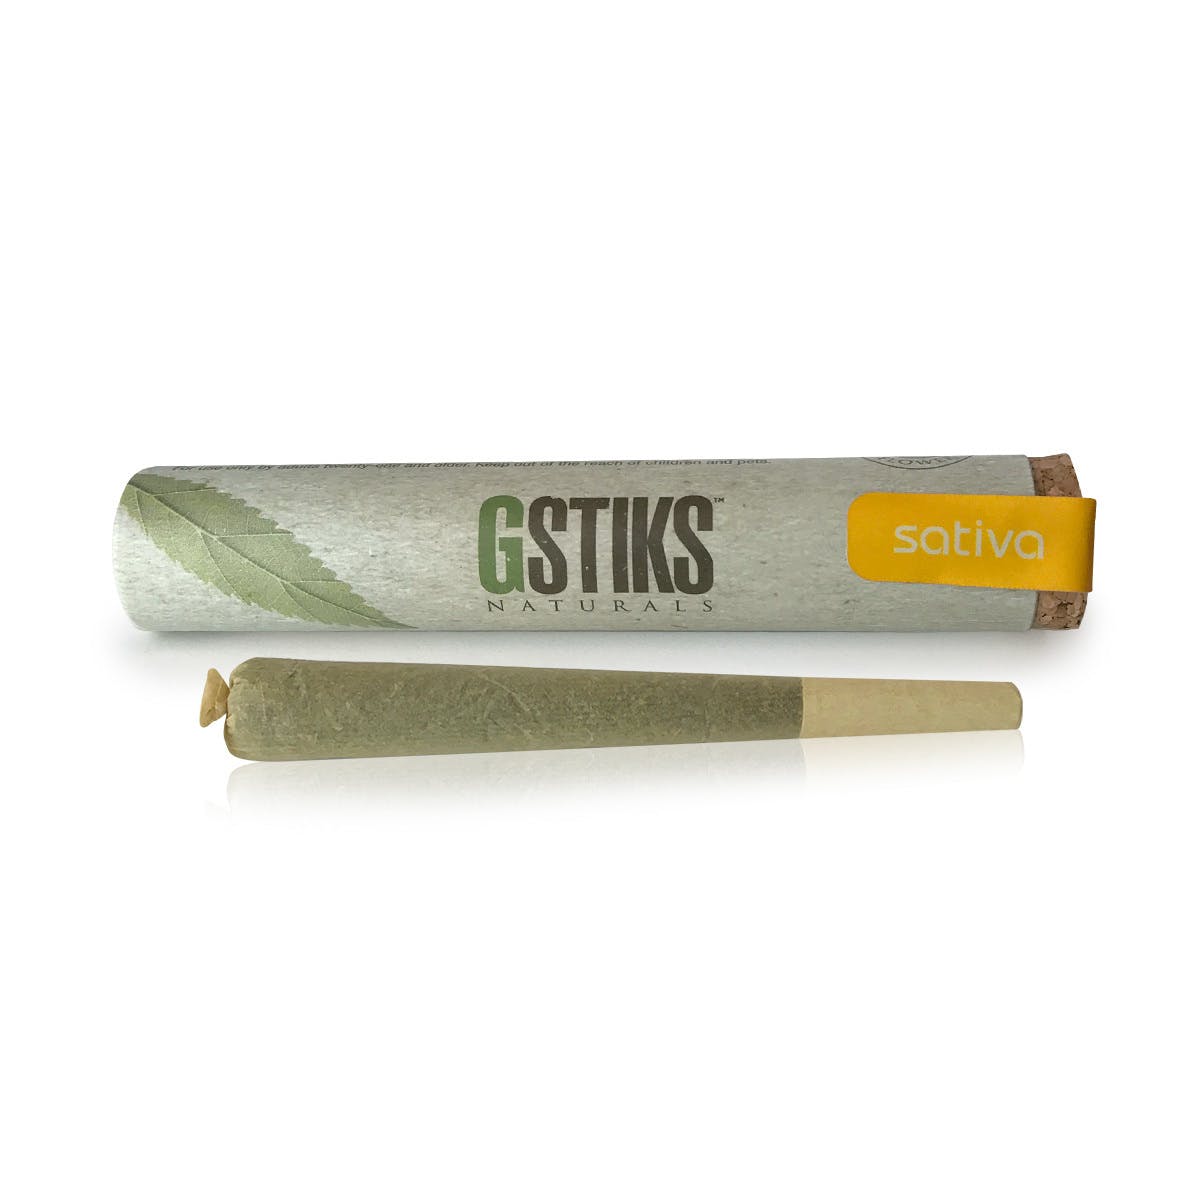 marijuana-dispensaries-bannings-finest-in-banning-g-stik-natural-sativa